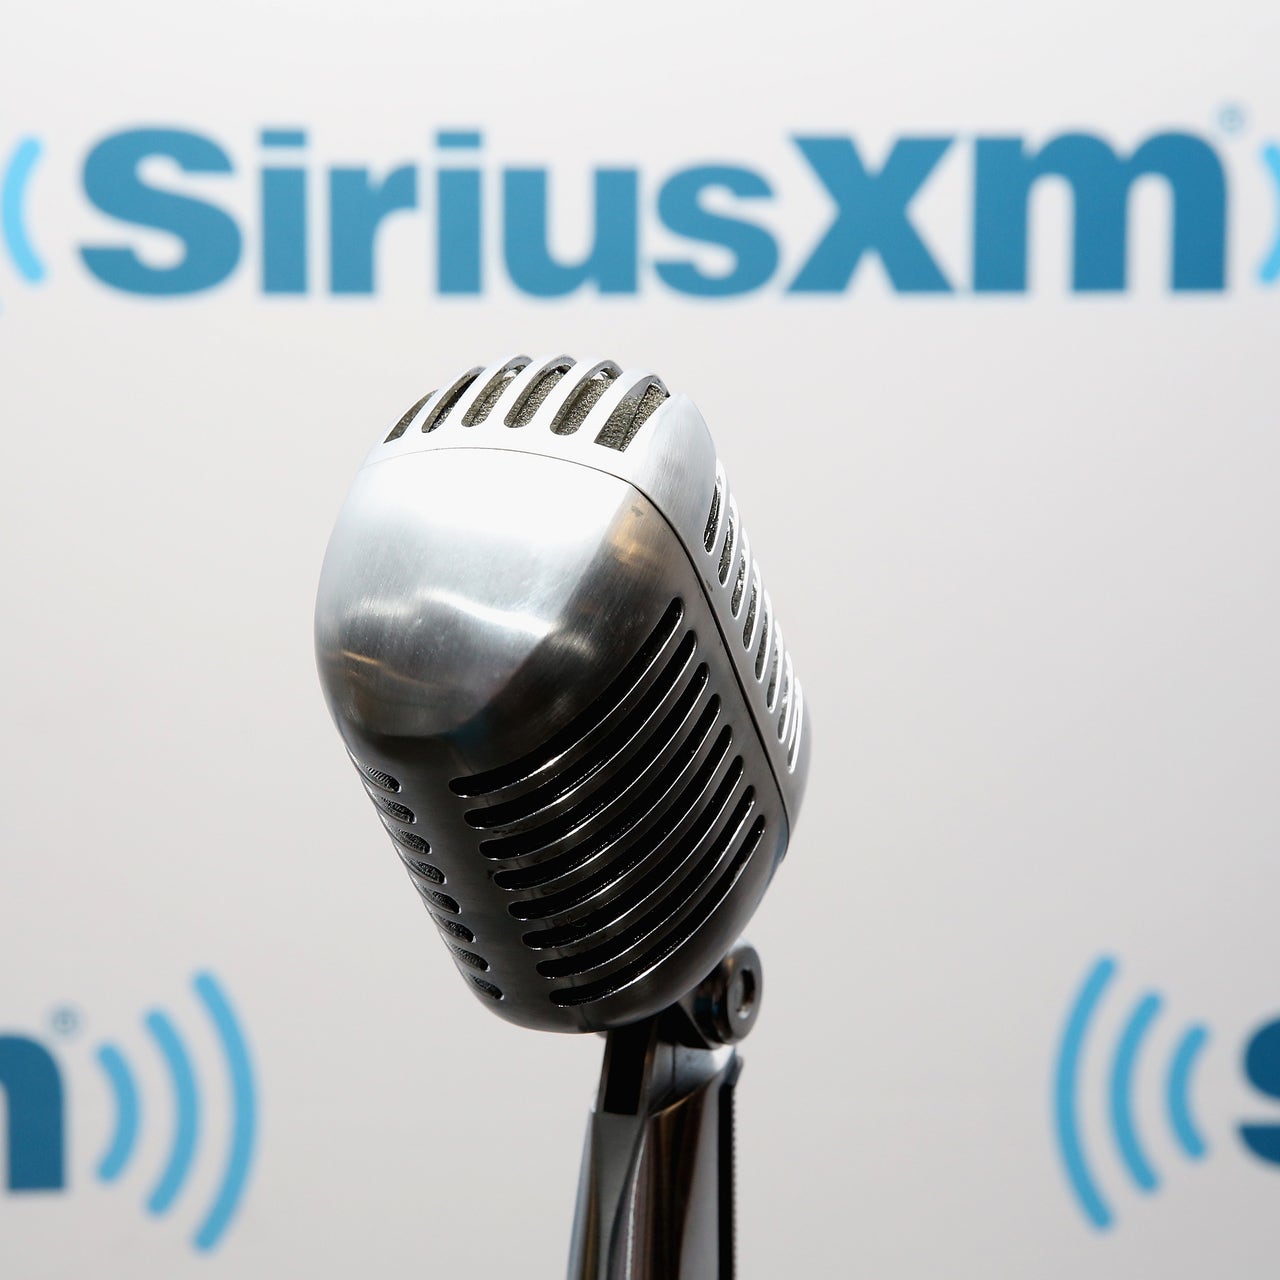 Nfl Week 1 Sirius Xm Radio Channels Fox Sports